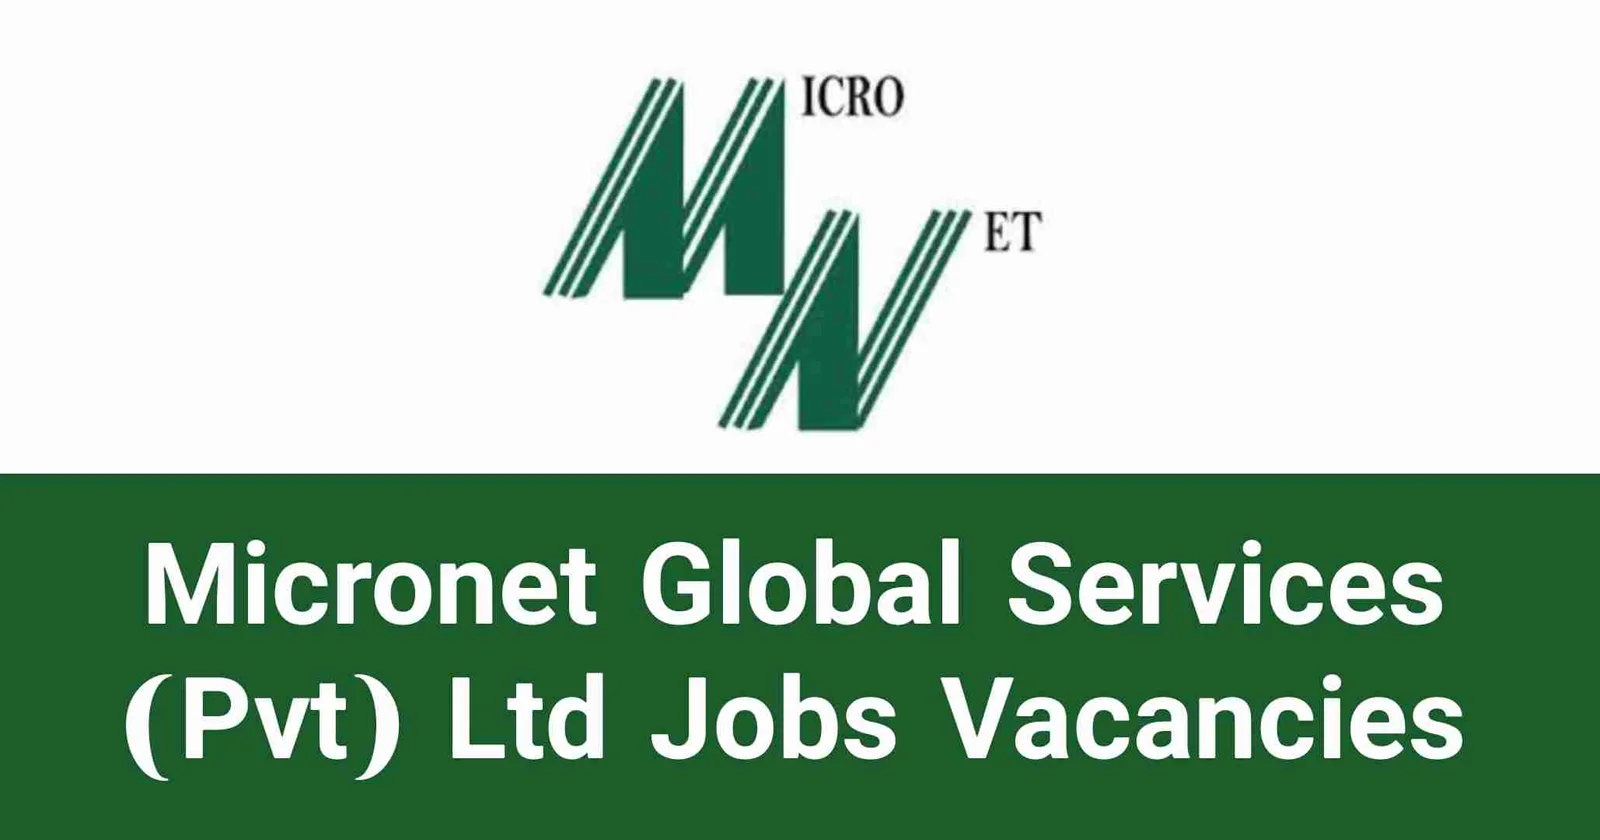 Micronet Global Services (Pvt) Ltd Jobs Vacancies